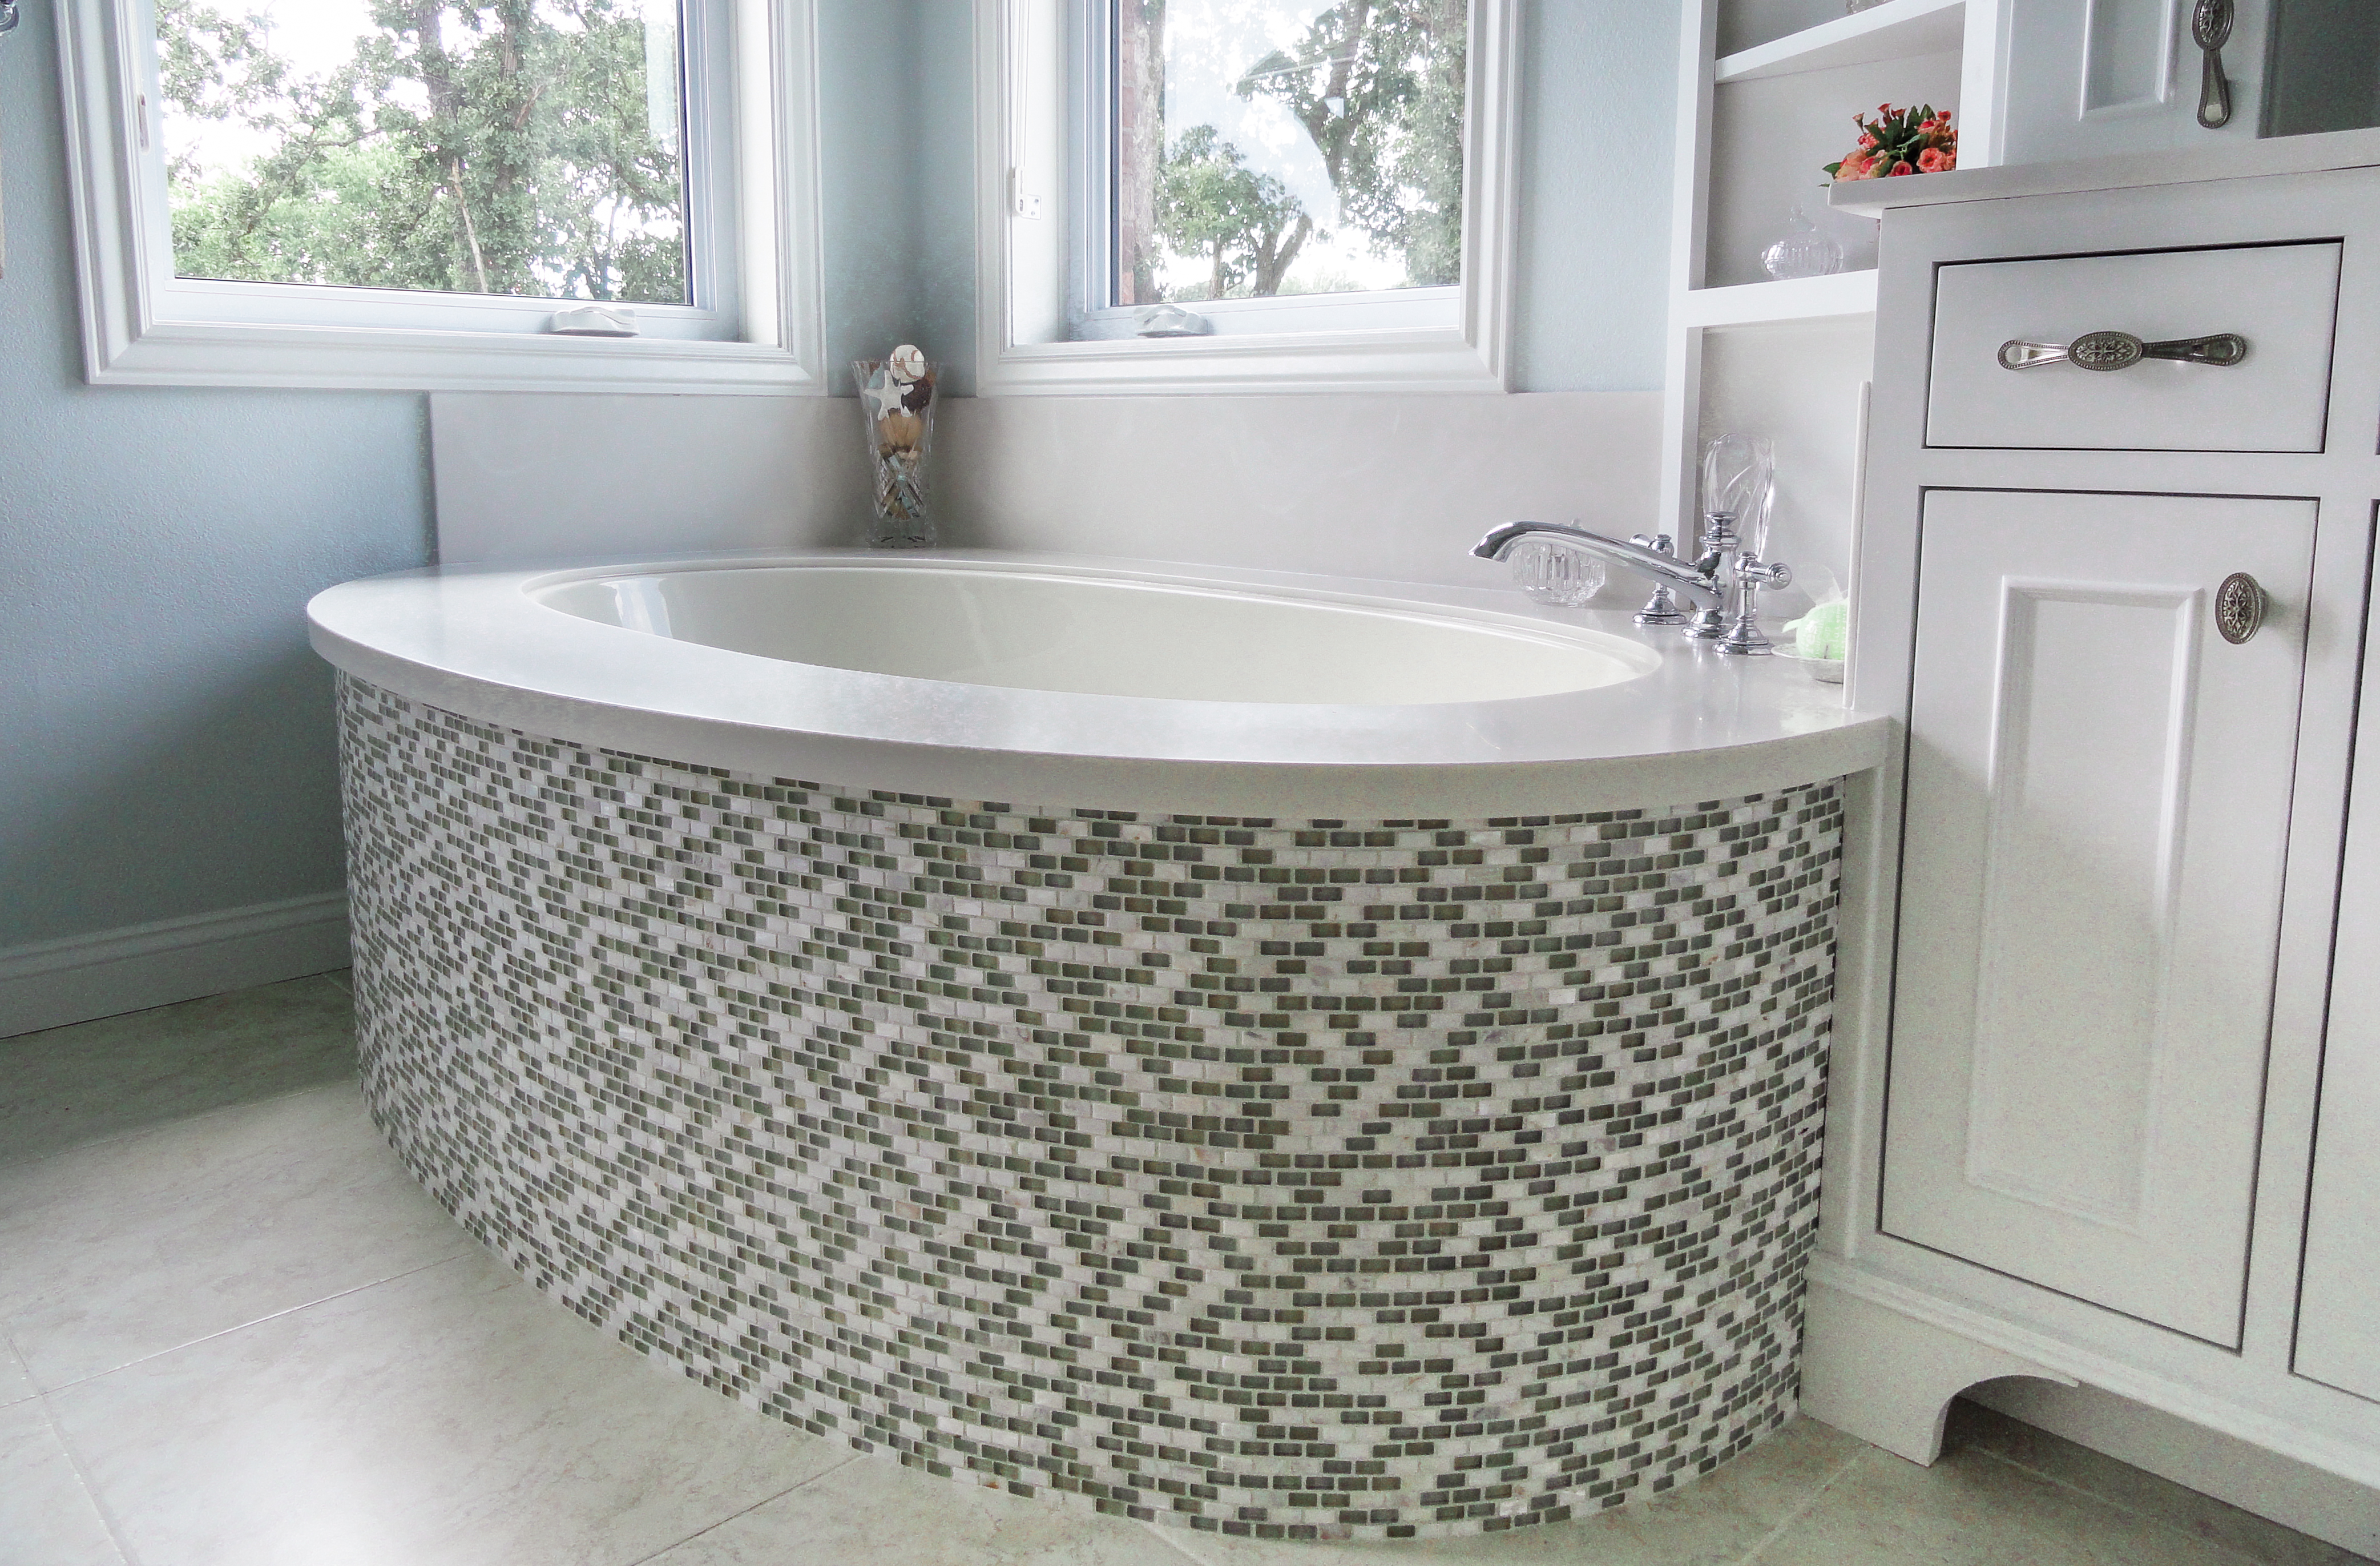 tile tub, soaking tub, round tub, inset cabinets, white cabinets, white tub, master bathroom